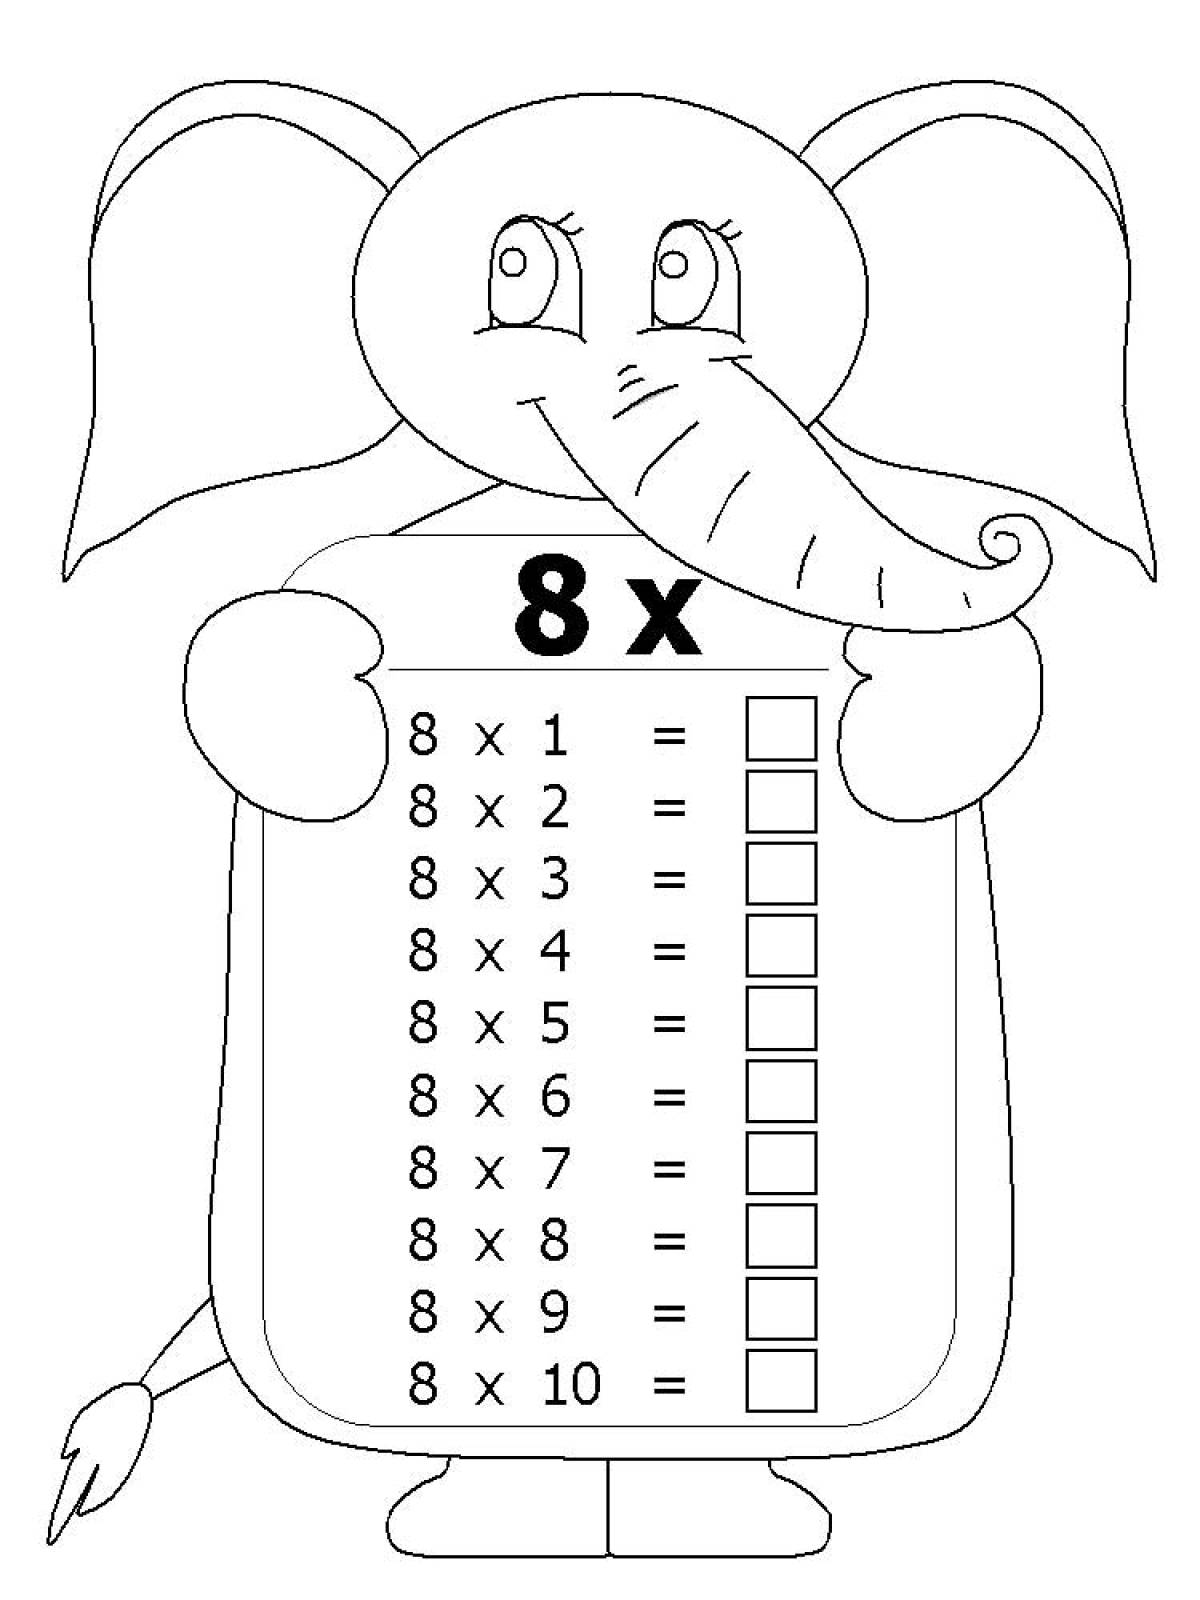 Multiplication table 13